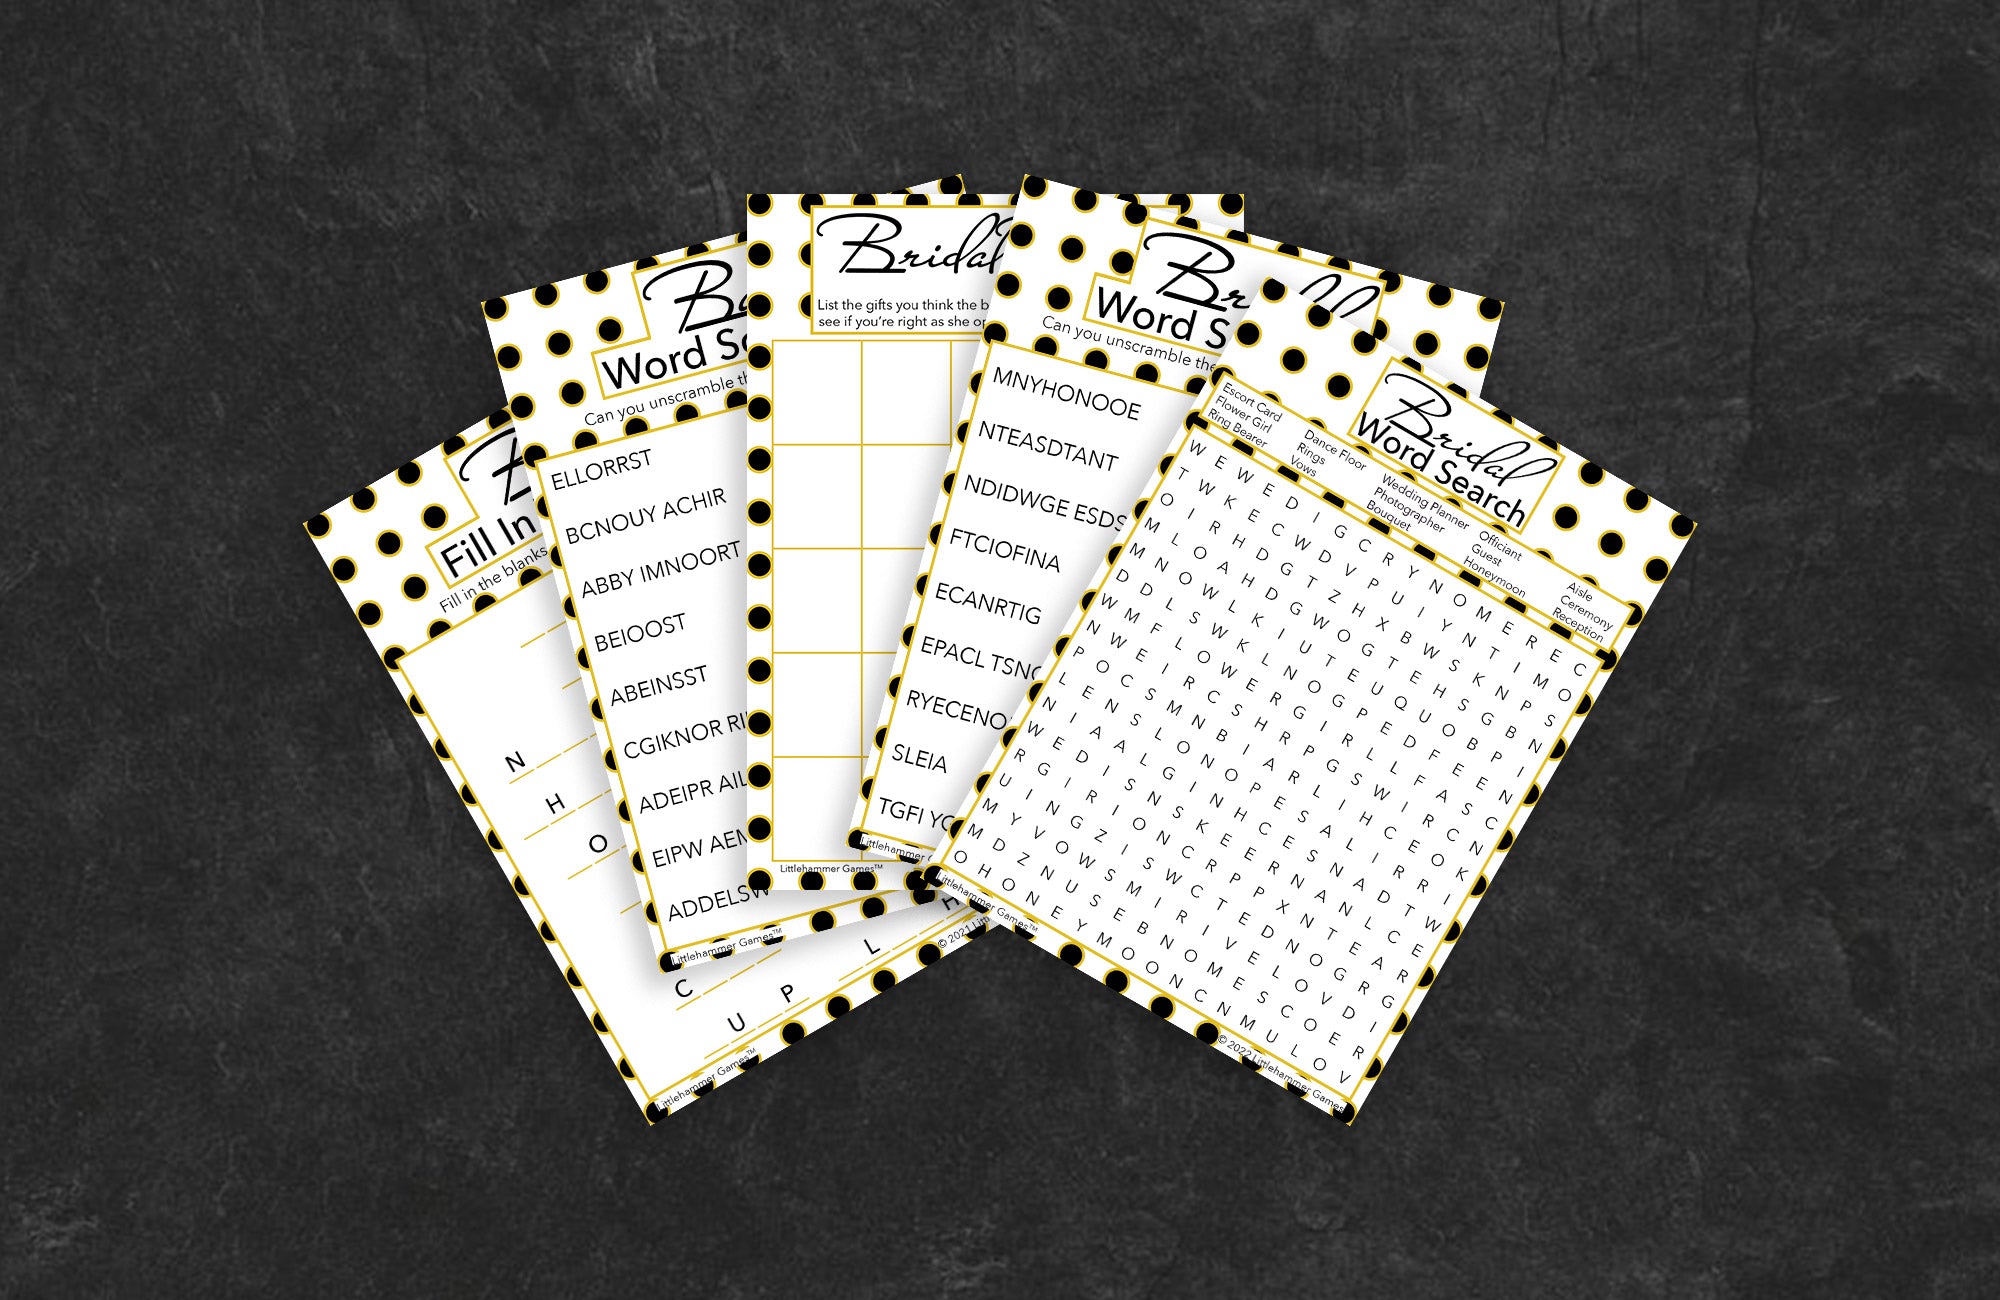 Bachelorette Bingo - Black and Gold Polka Dot Printable Game Cards –  Littlehammer Games